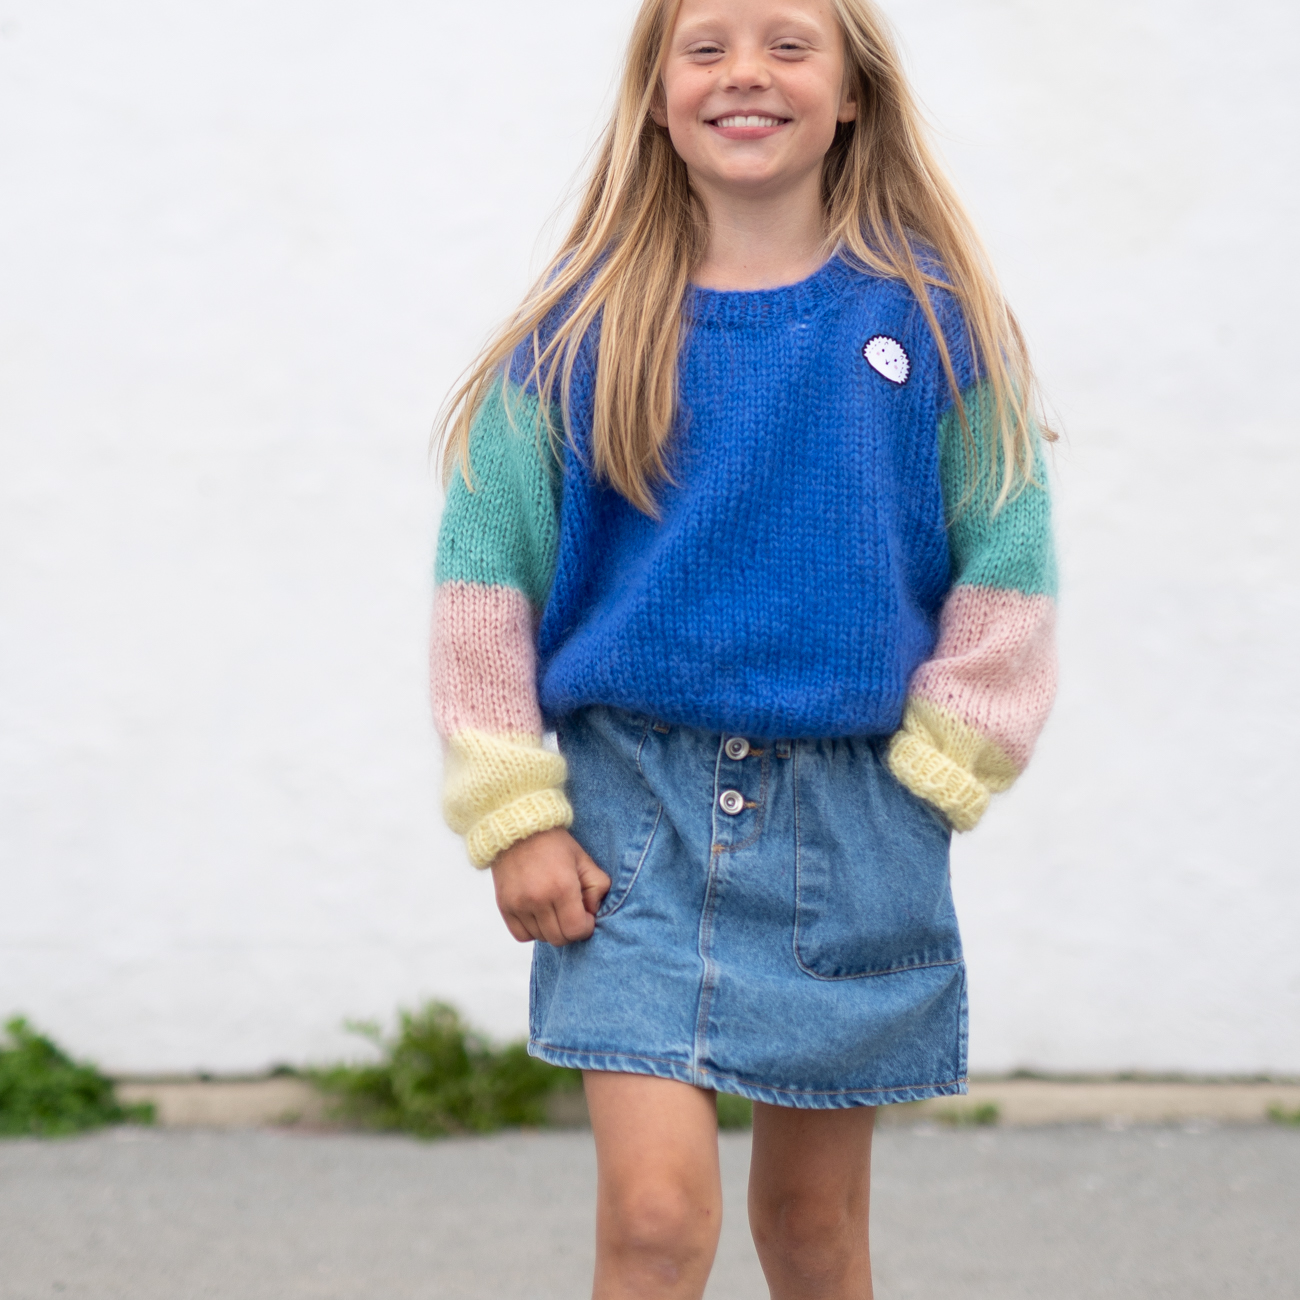  - Hedgehog label | Embroidery patch kids - by HipKnitShop - 25/08/2019